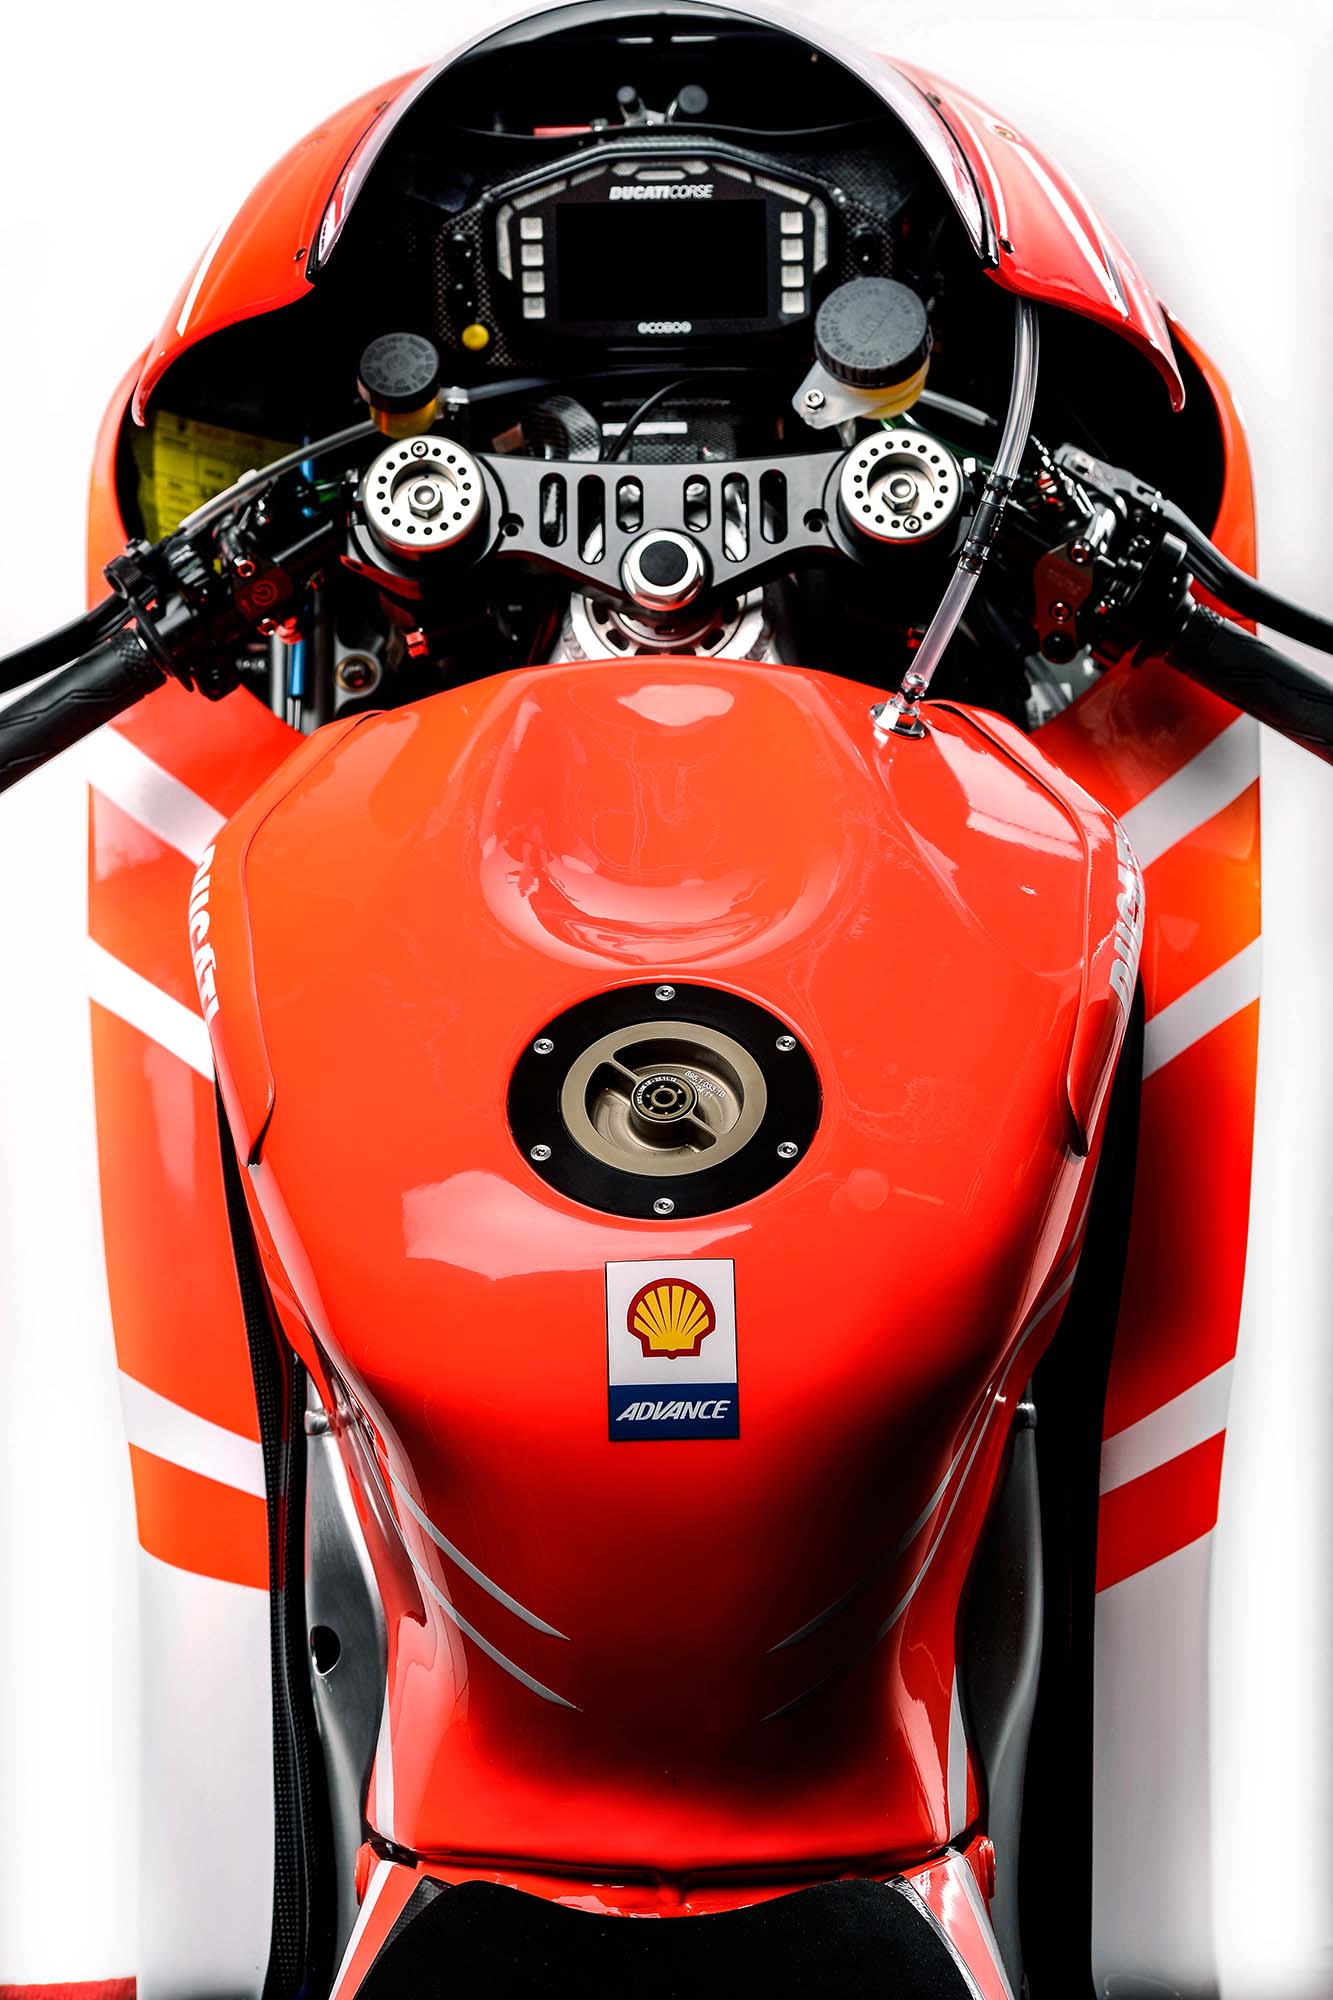 Motor Terbaru Nicky Hayden Dan Andrea Dovizioso AutonetMagz